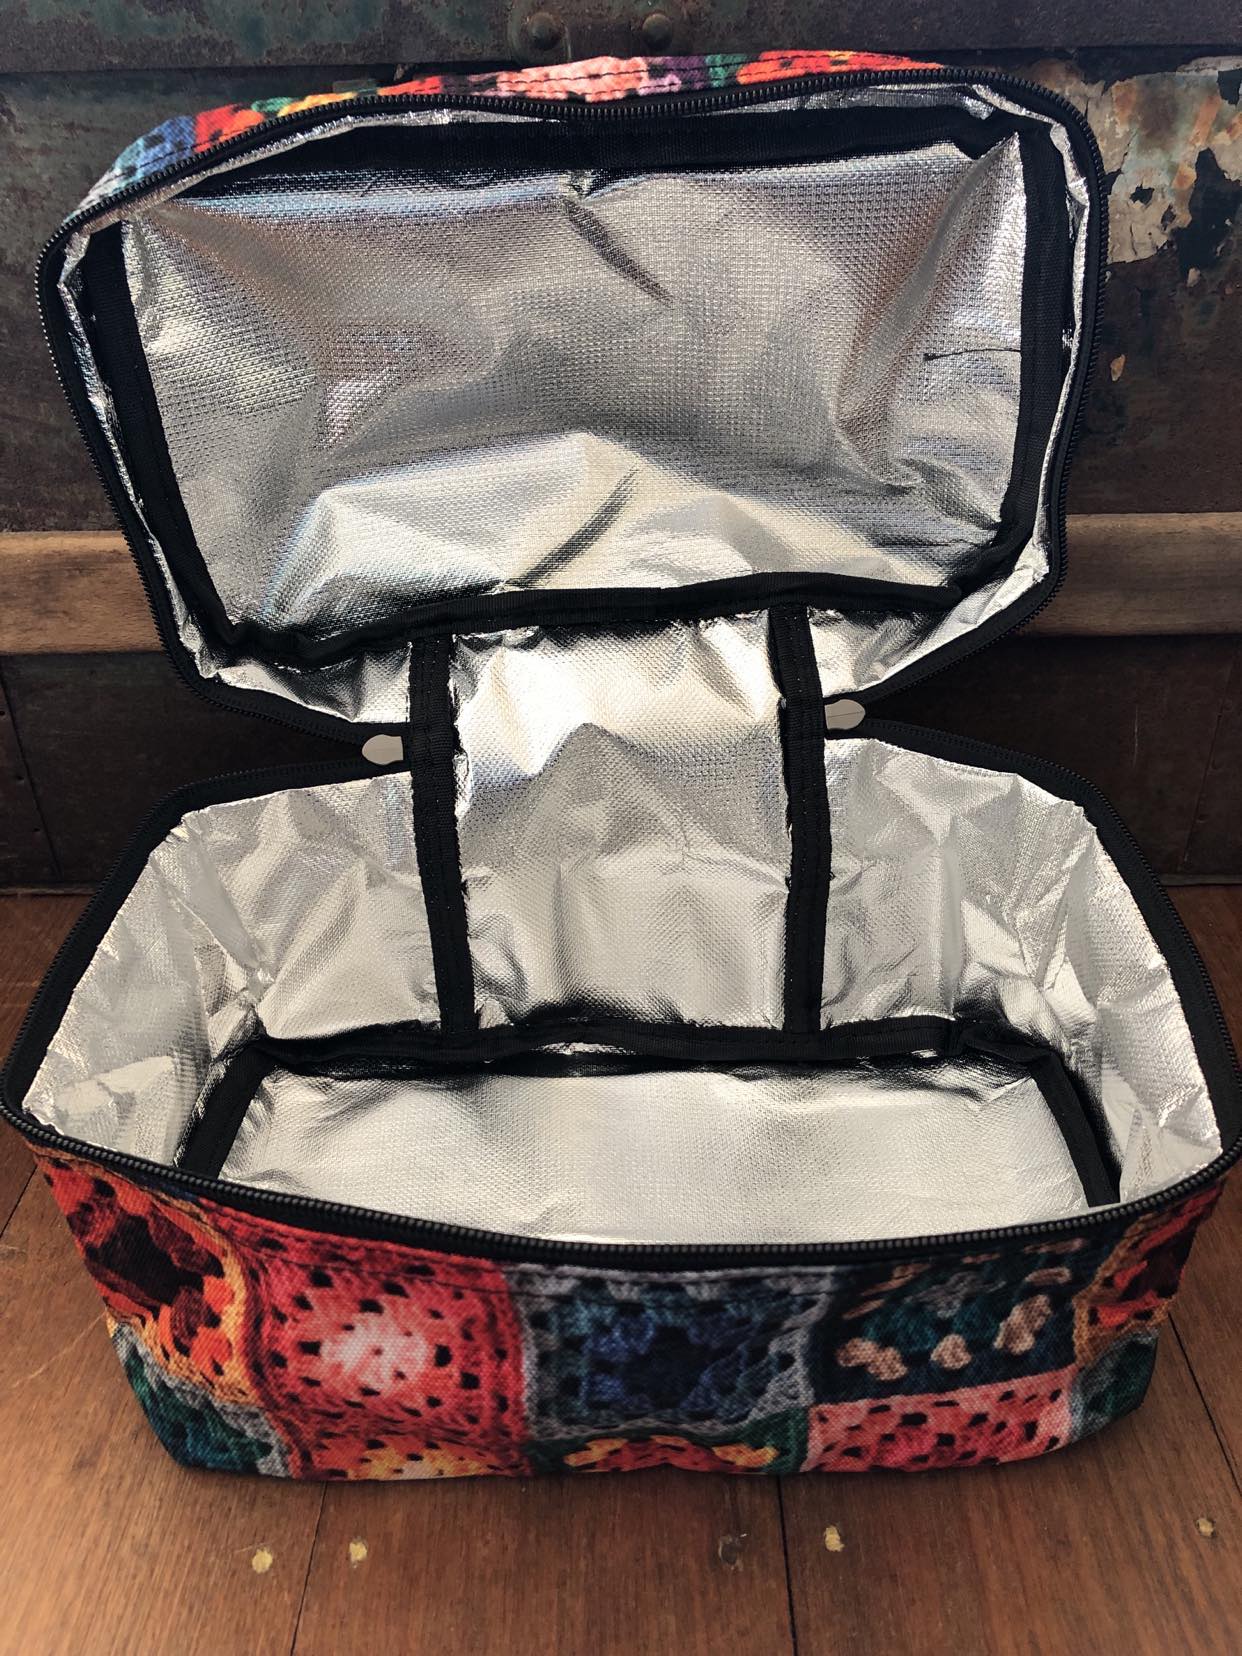 Crochet Granny Squares - Cosmetics / Lunch Bag